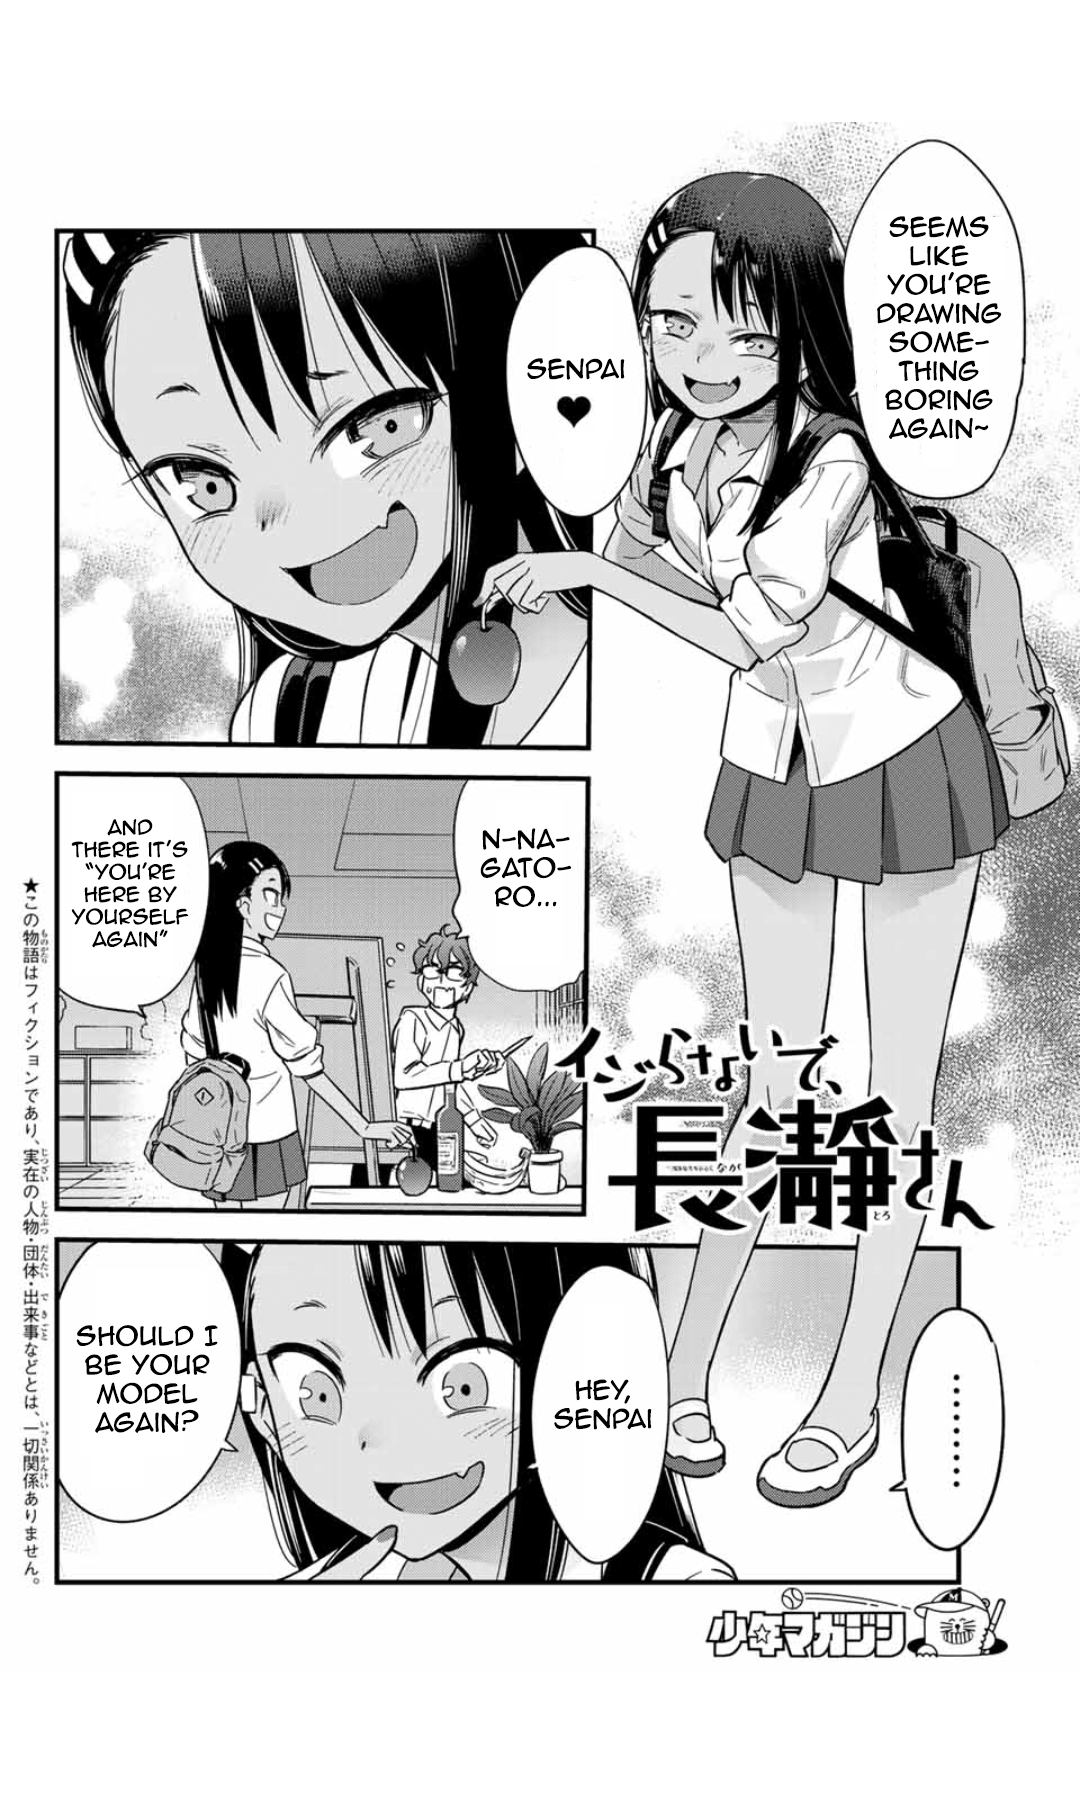 Read Please Dont Bully Me Nagatoro Manga English New Chapters